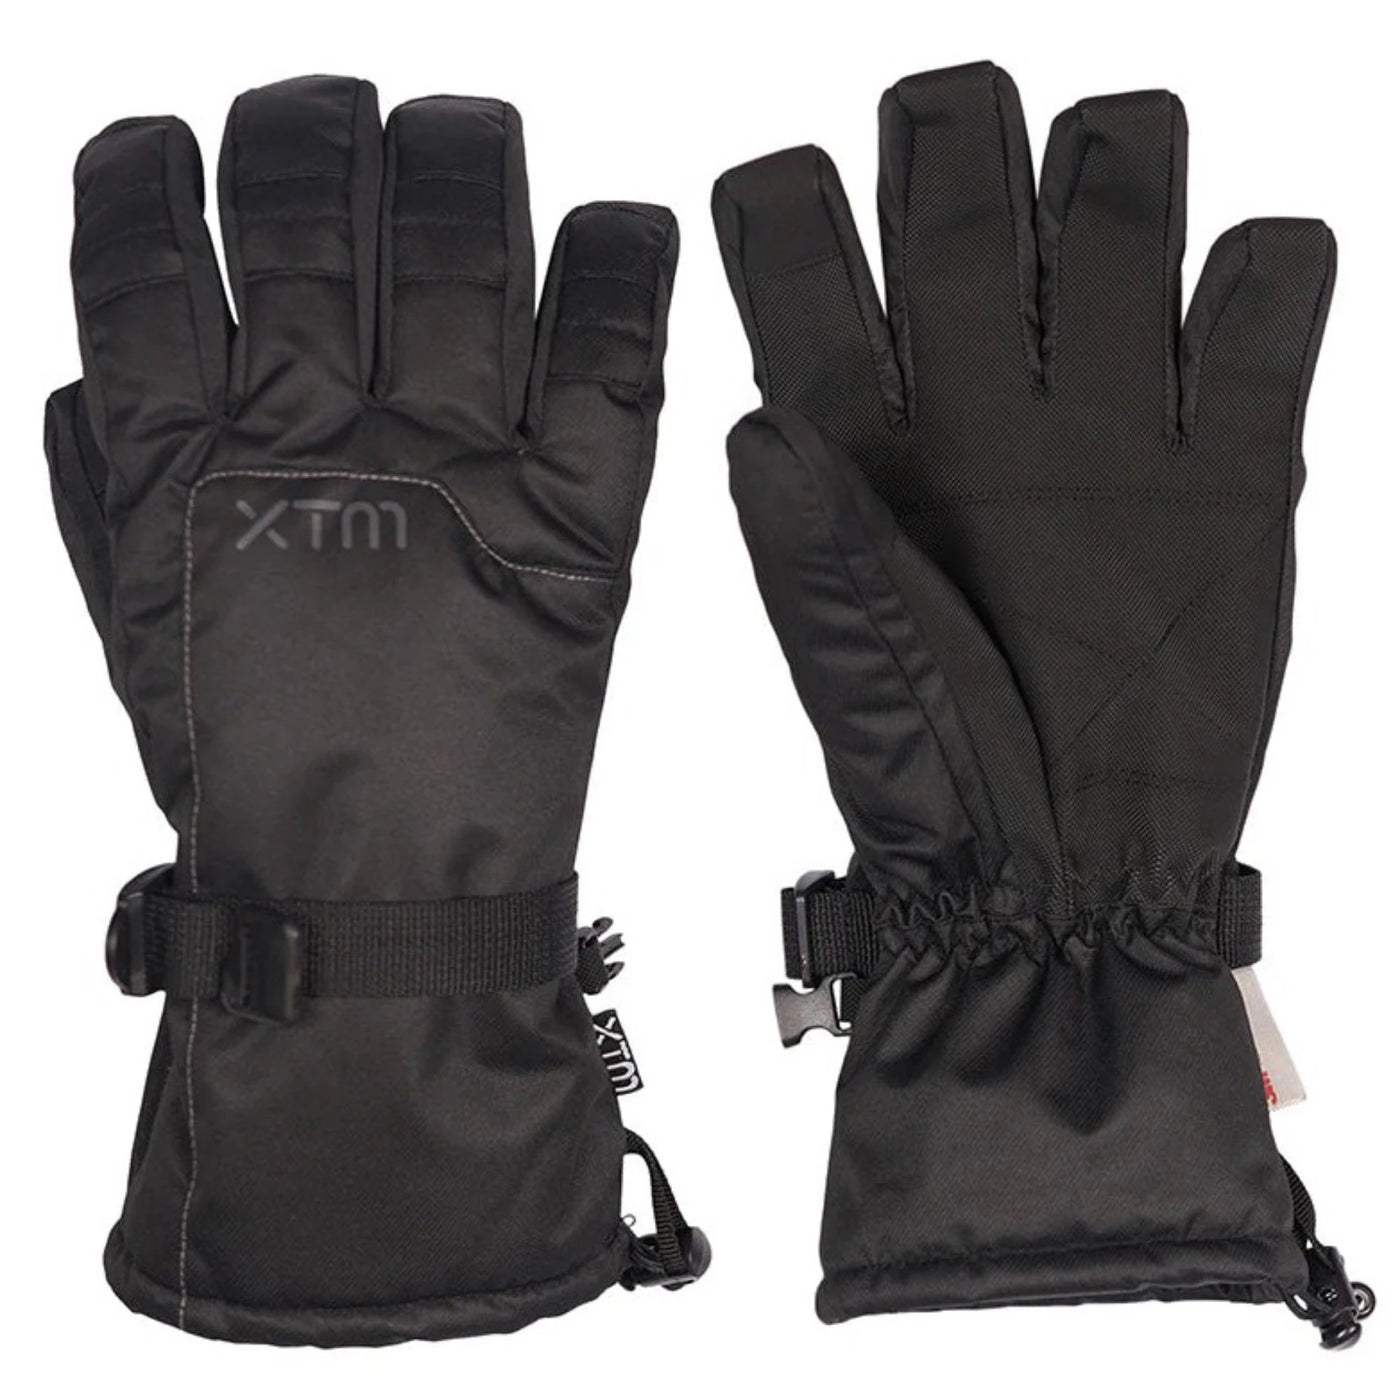 XTM Men's Zima II Snow Gloves - Black